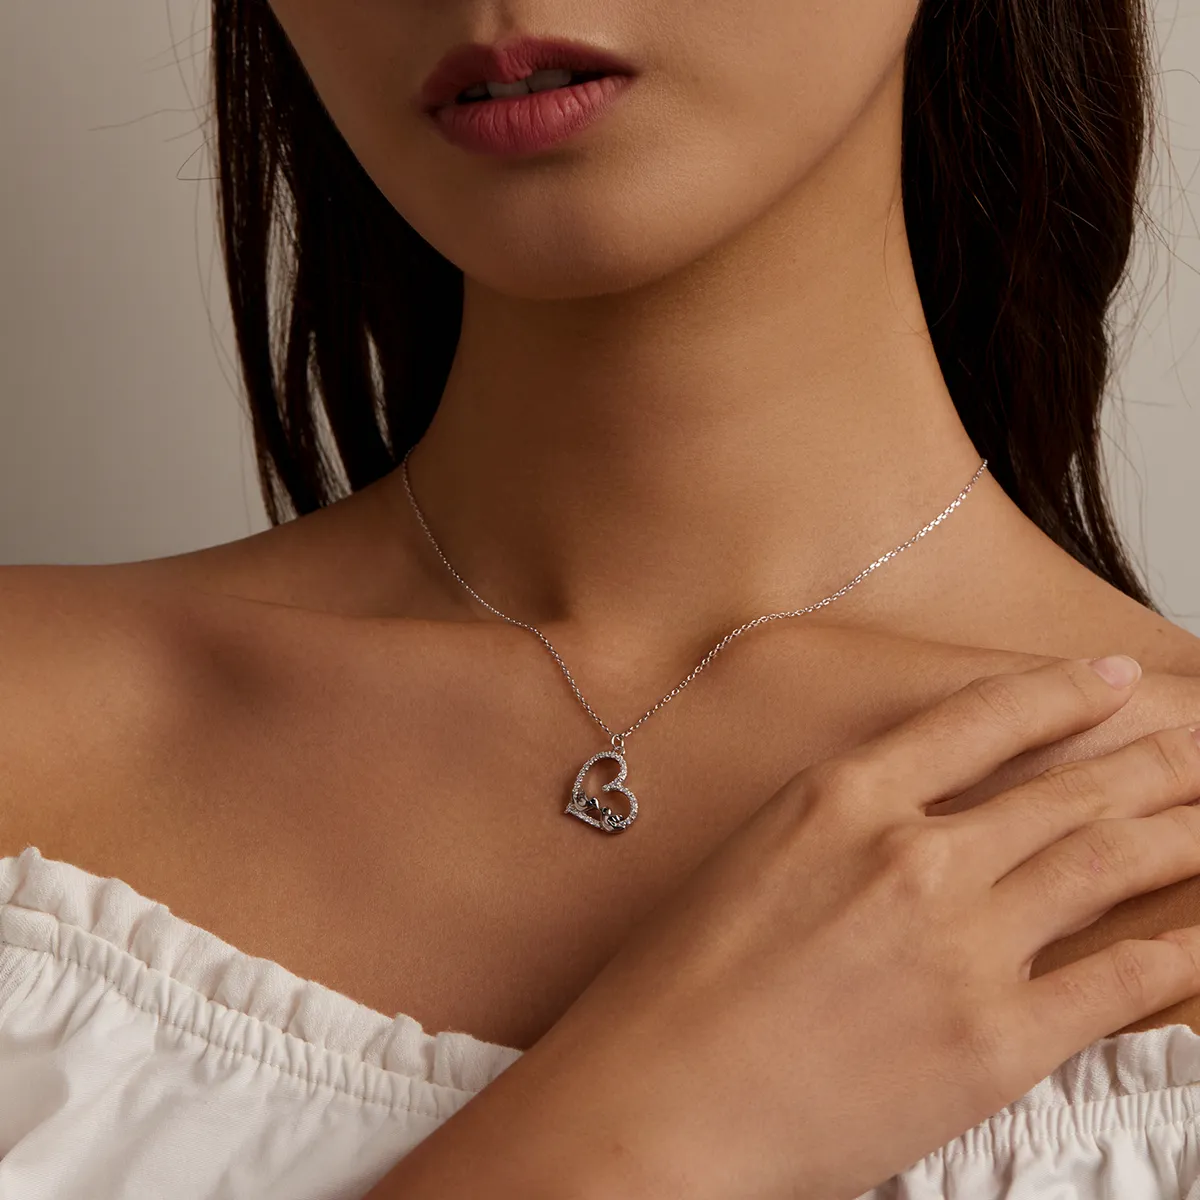 Pandora Style Love Bird Necklace - BSN237